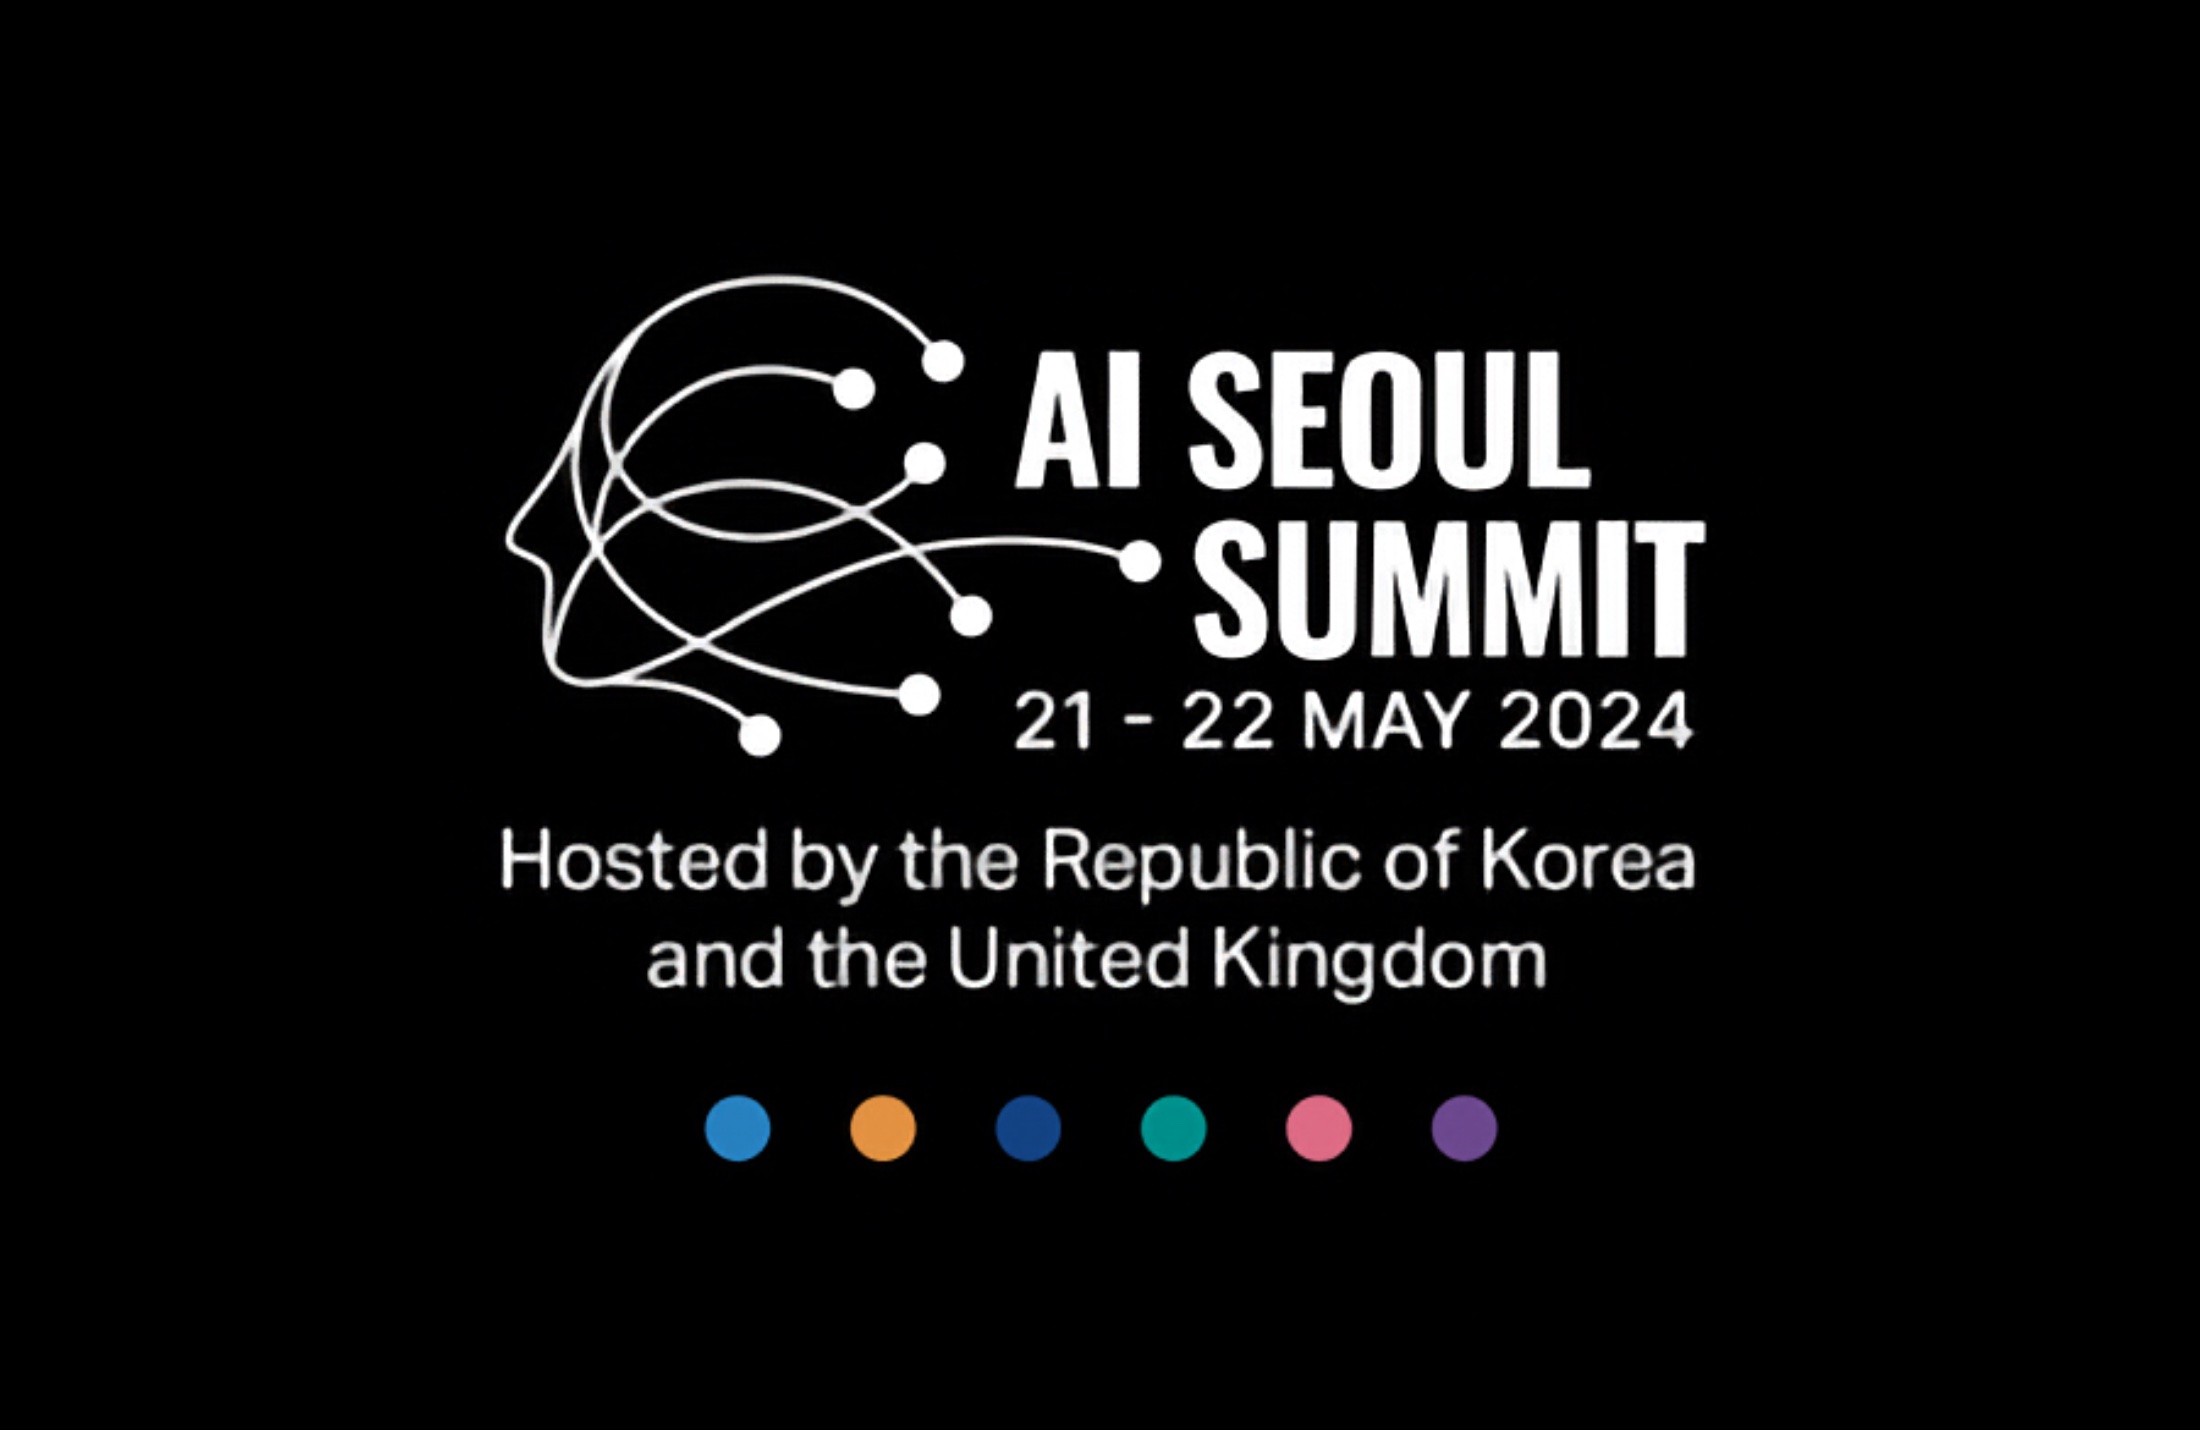 UK and South Korea to co-host AI Seoul Summit